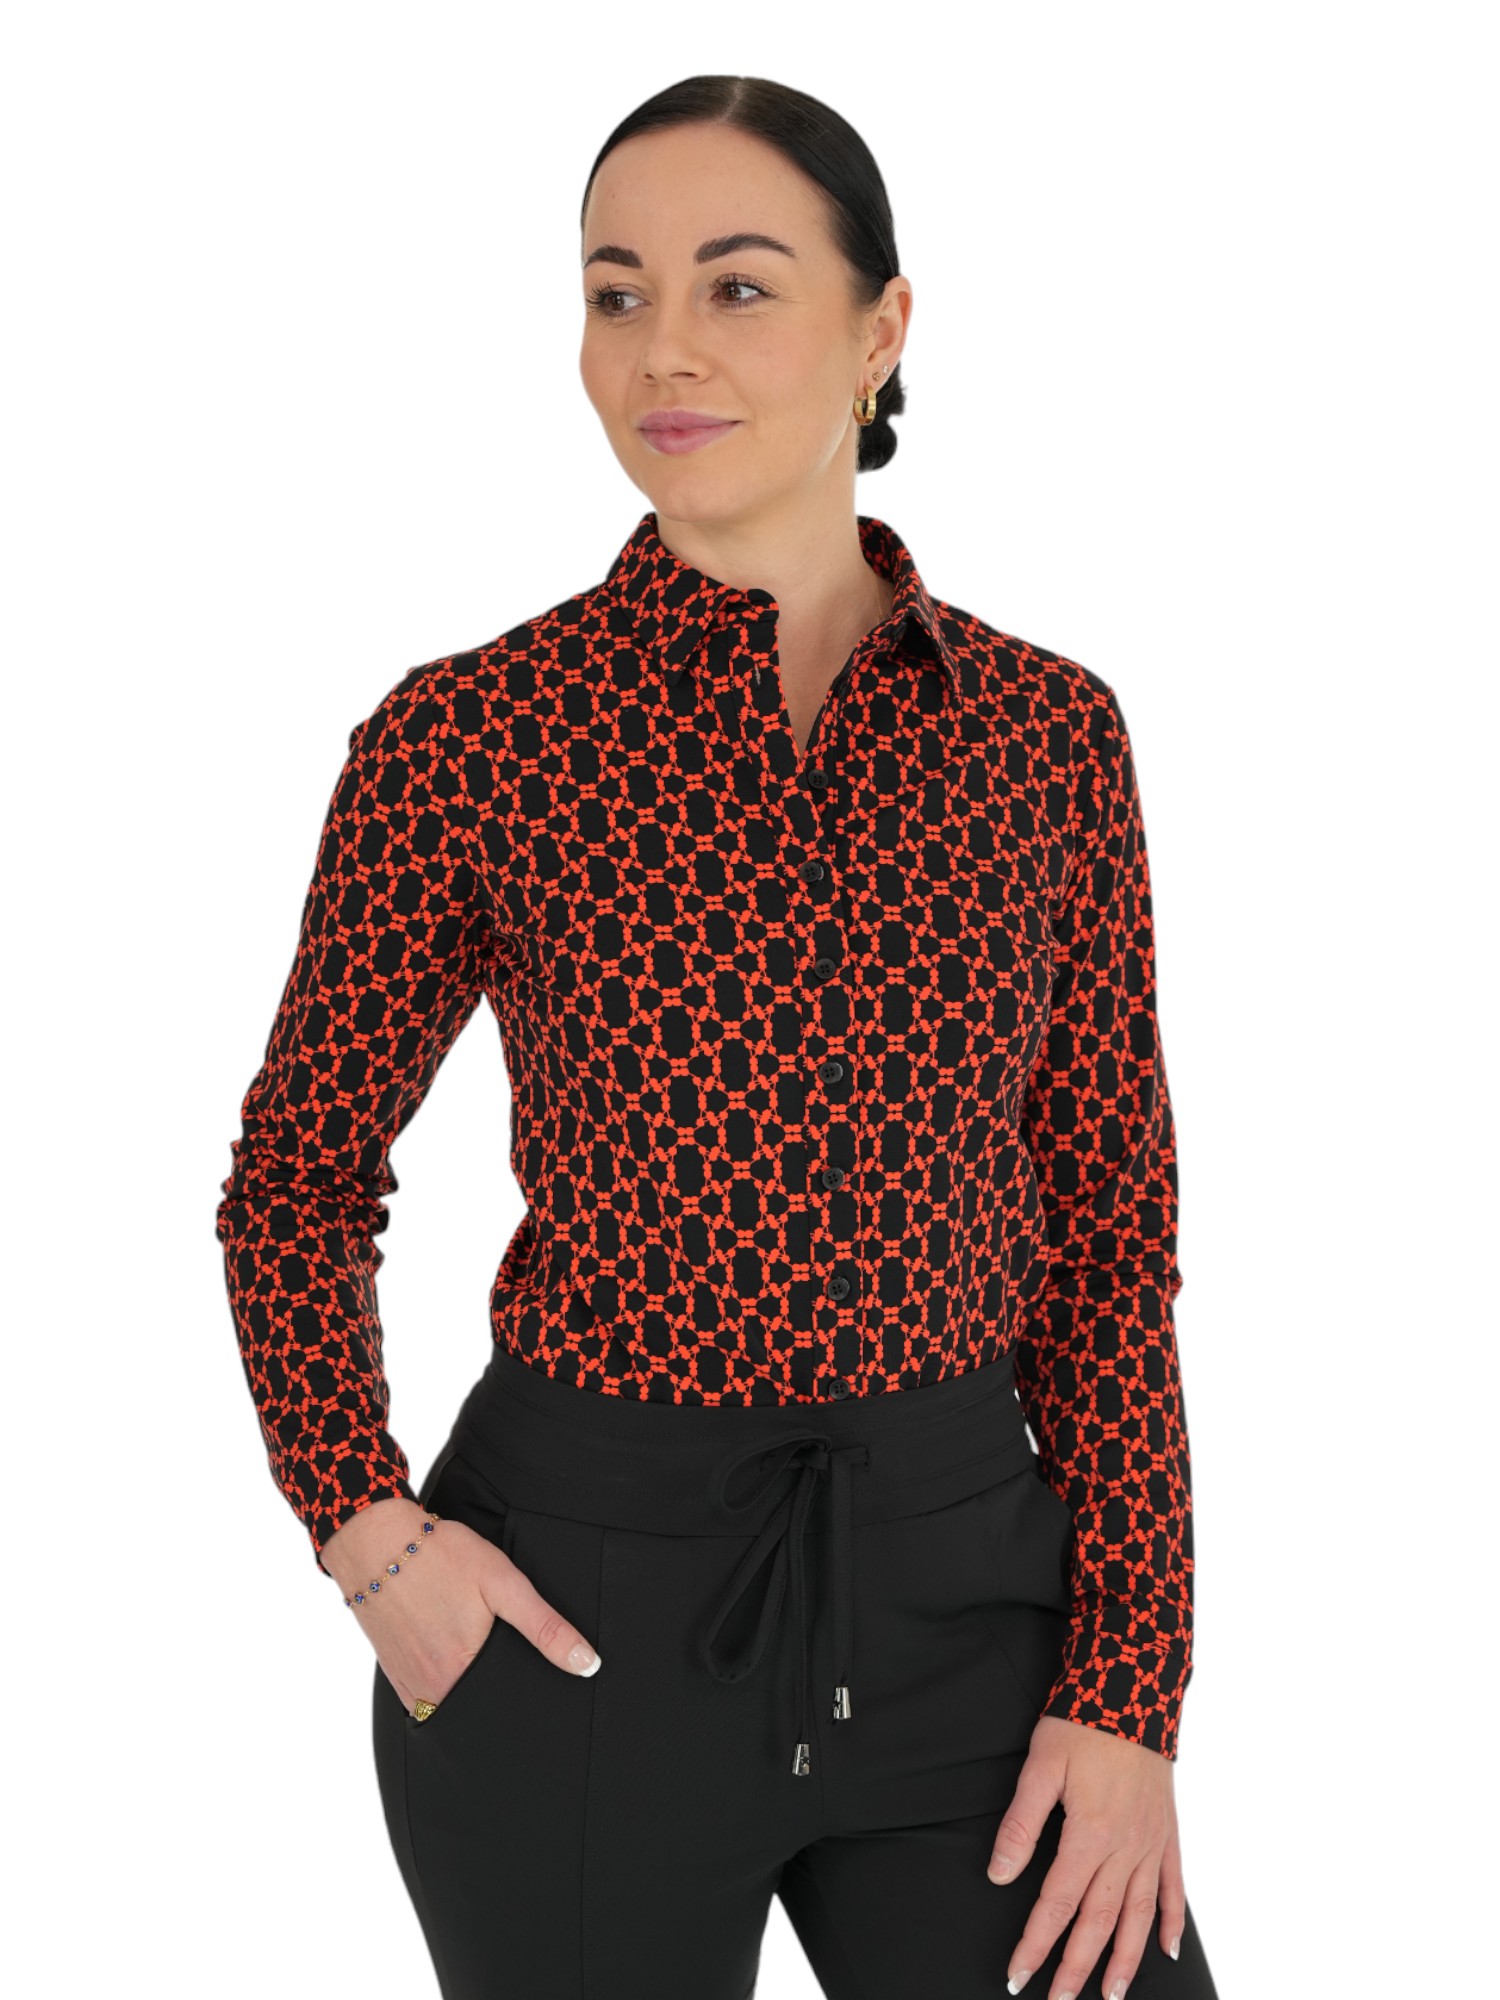 travelstof-blouse-met-dotted-print-zwart-oranje-van-mi-piace-60840.jpg